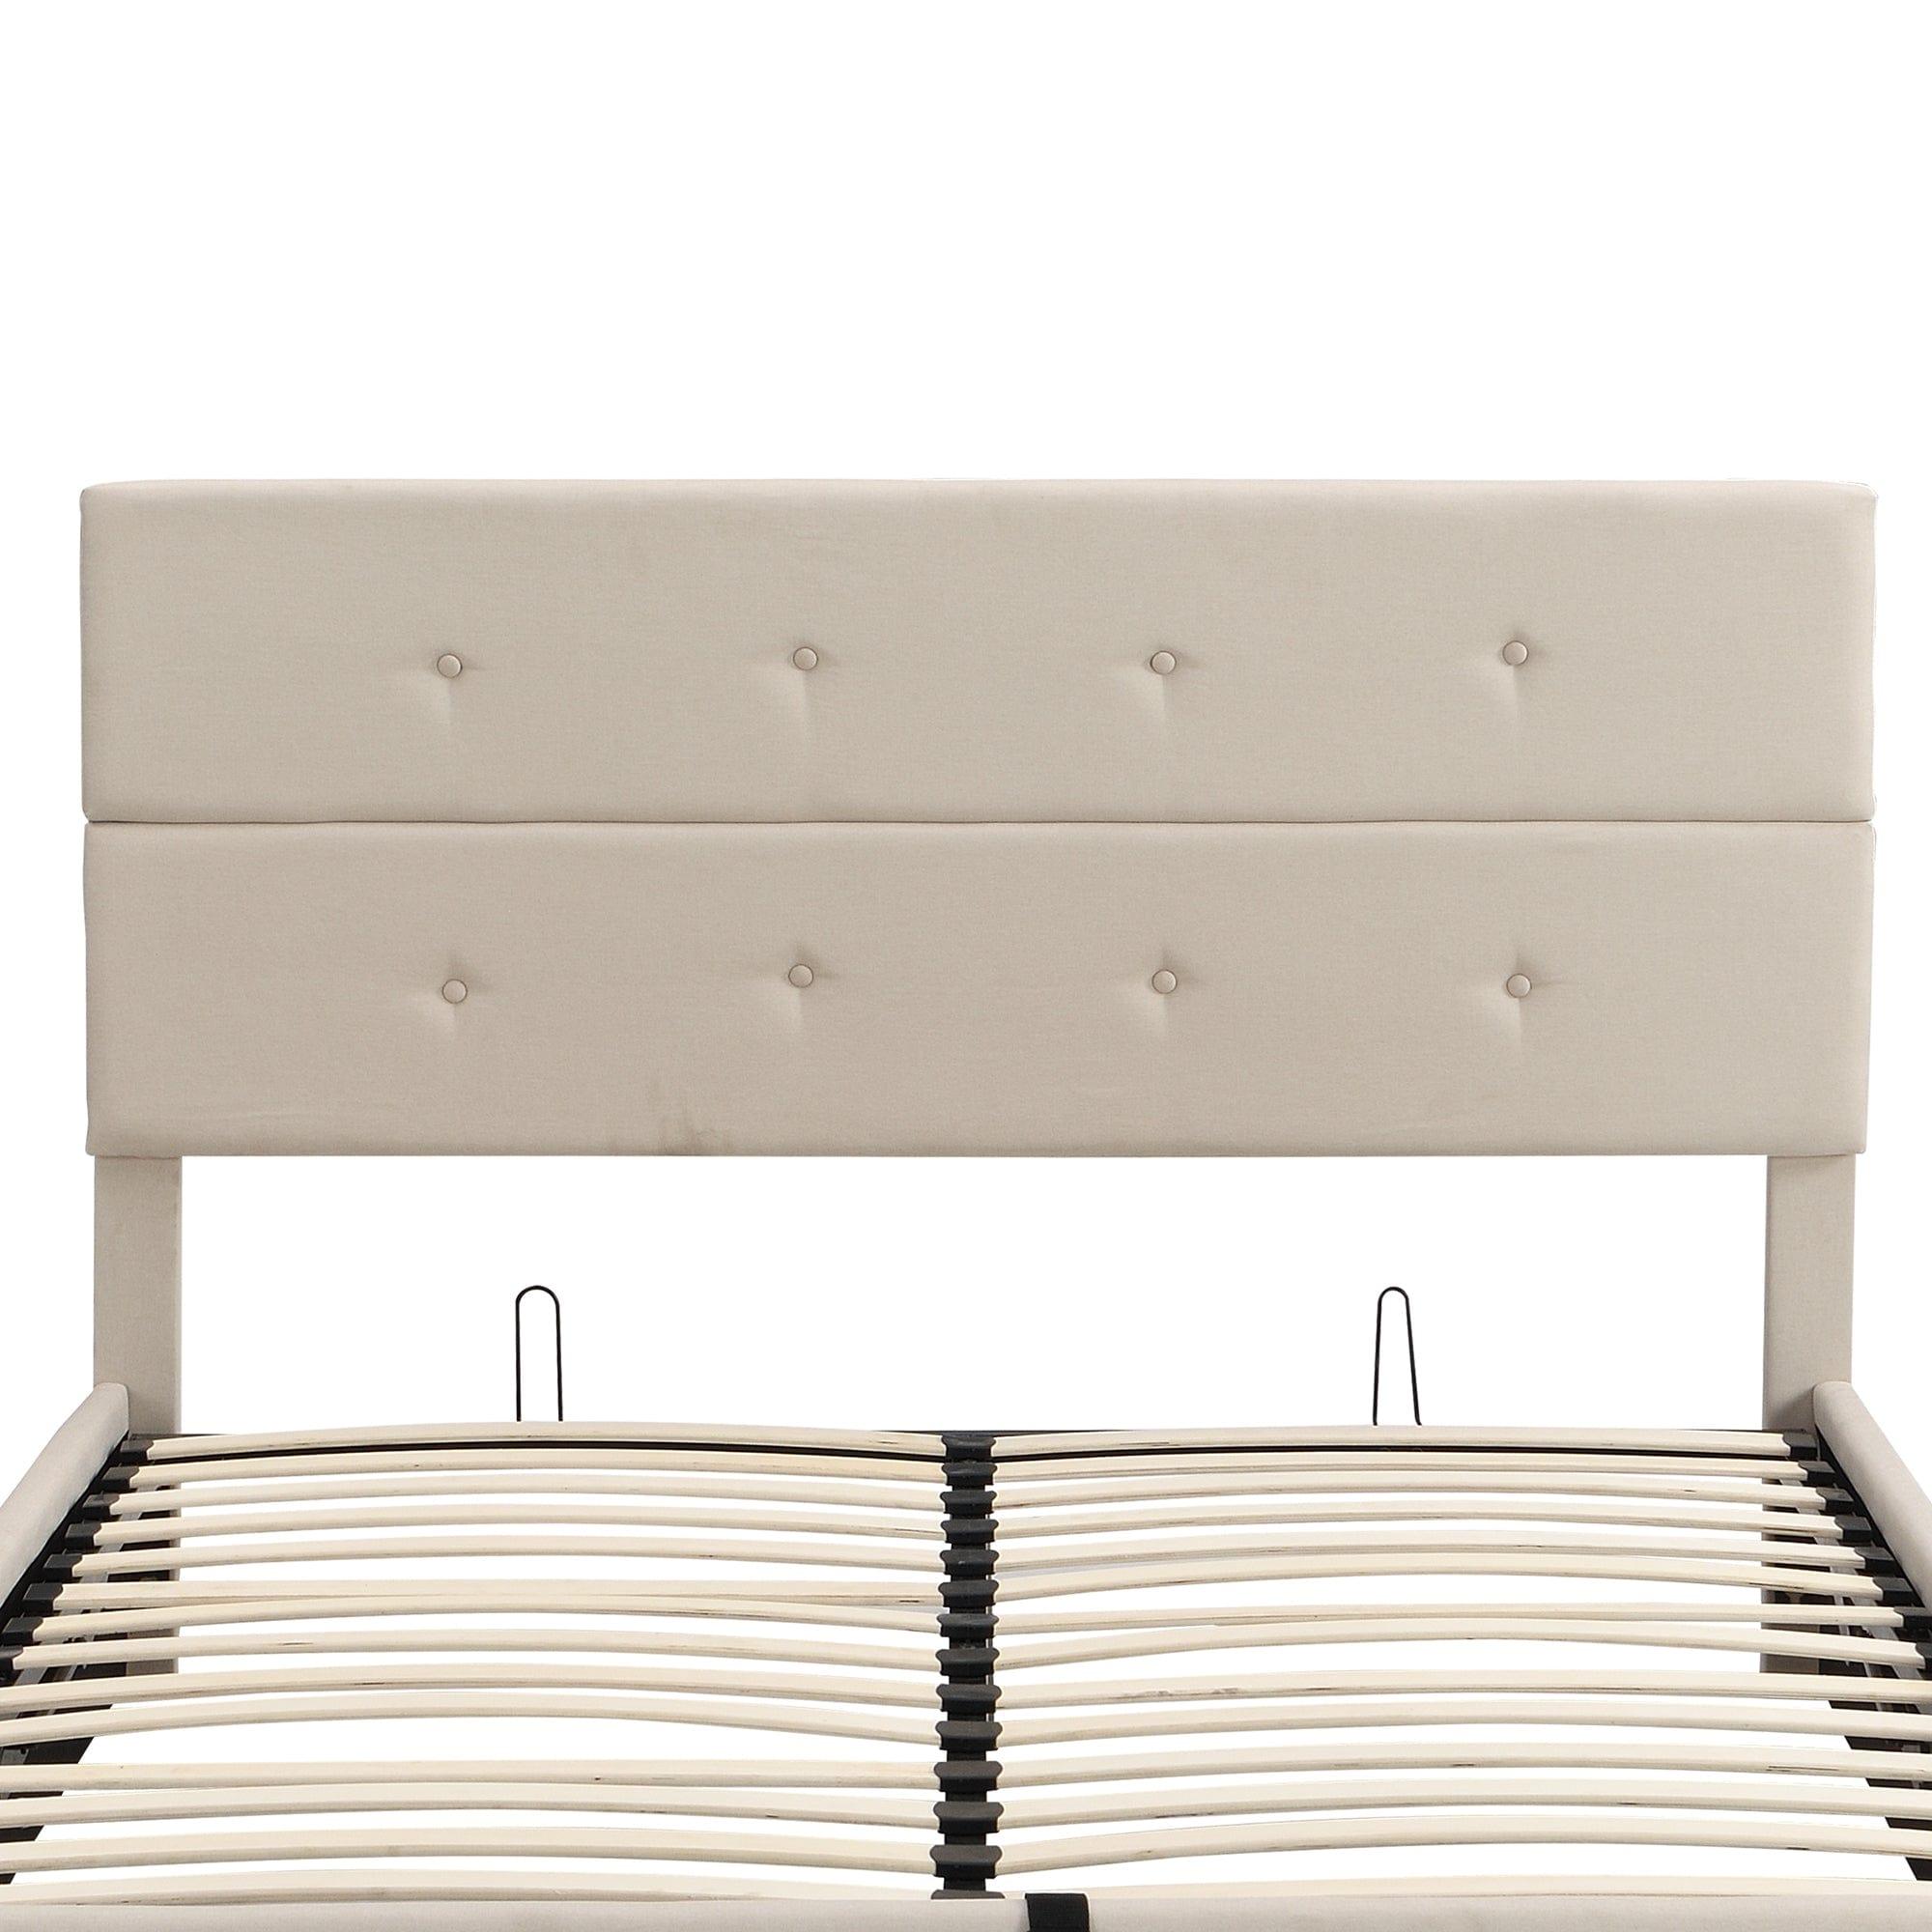 Shop Berlin Beige Upholstered Platform Bed with Under Storage - Queen Mademoiselle Home Decor